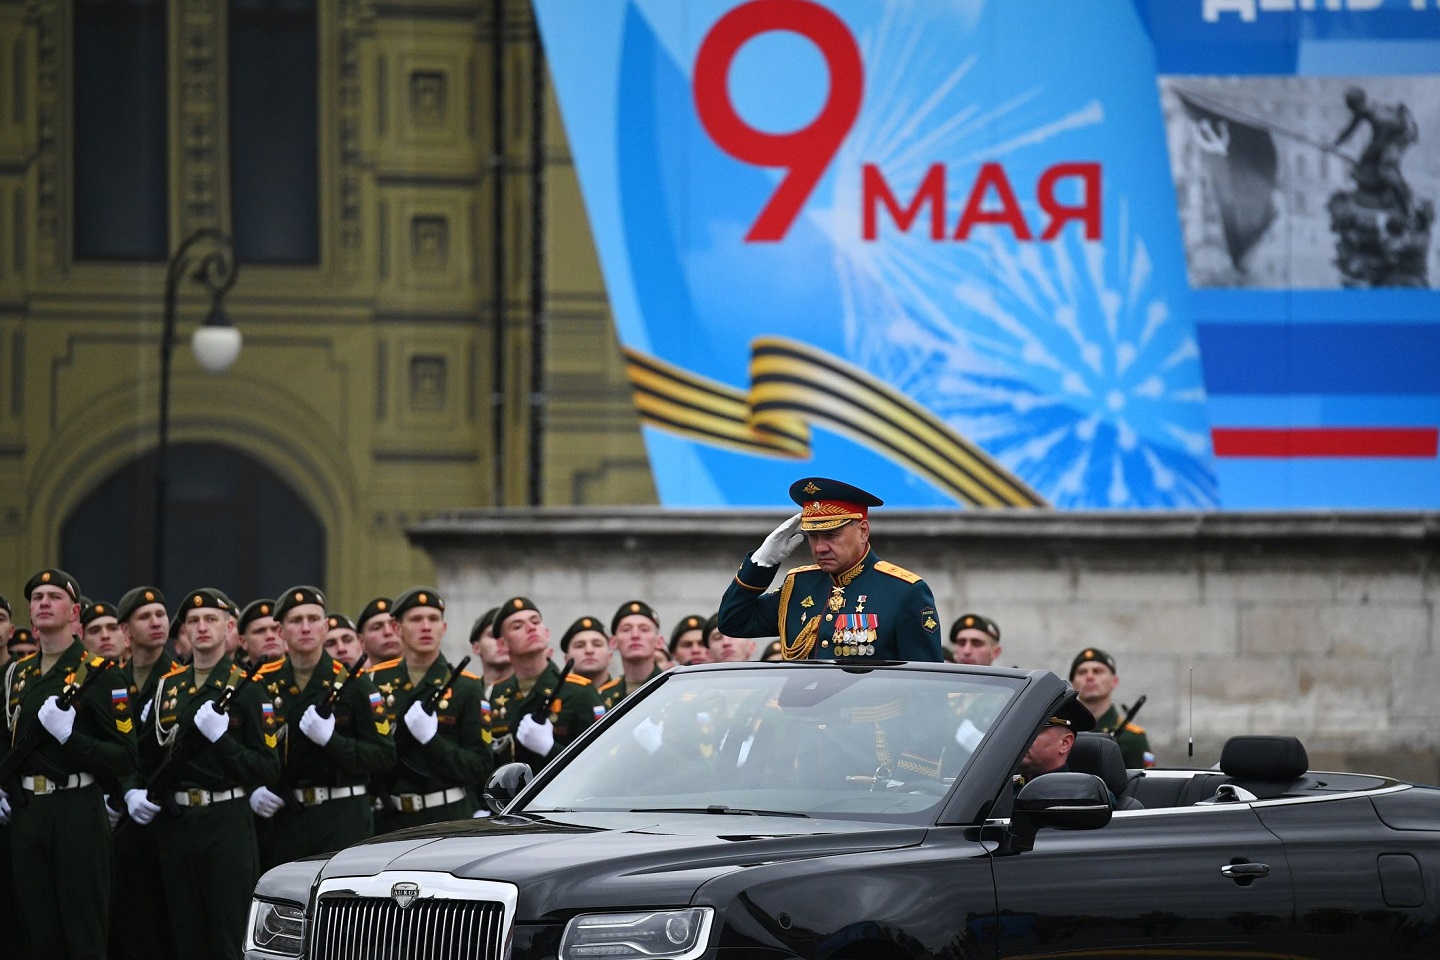 CNN | 胜利日的游行“低调” 普京讲话试图为入侵乌克兰辩护。没有讲出下一步会怎么样，让世界猜测 – 新战国时代